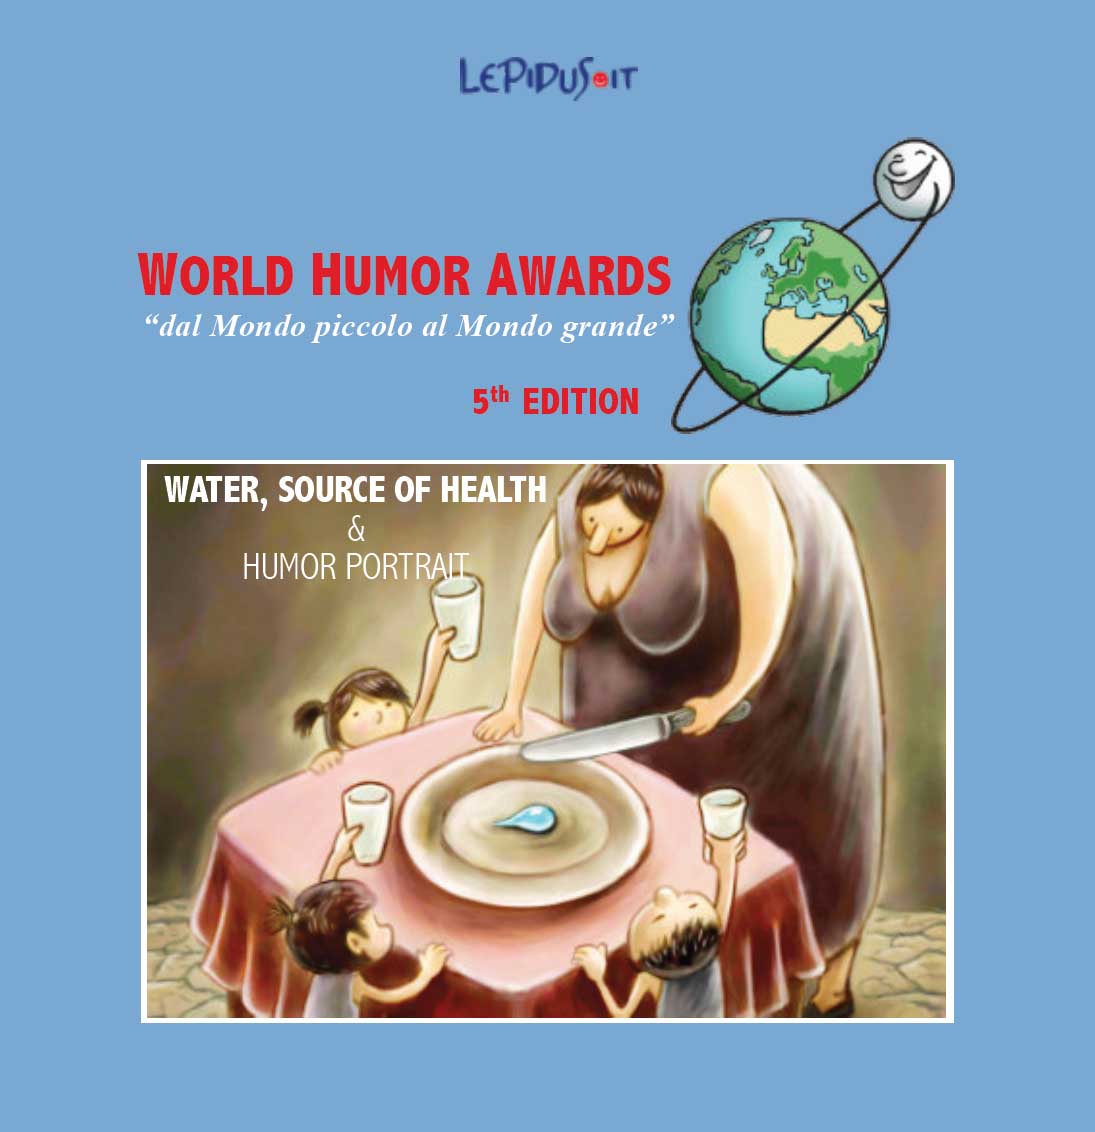 Catalog of the World Humor Awards